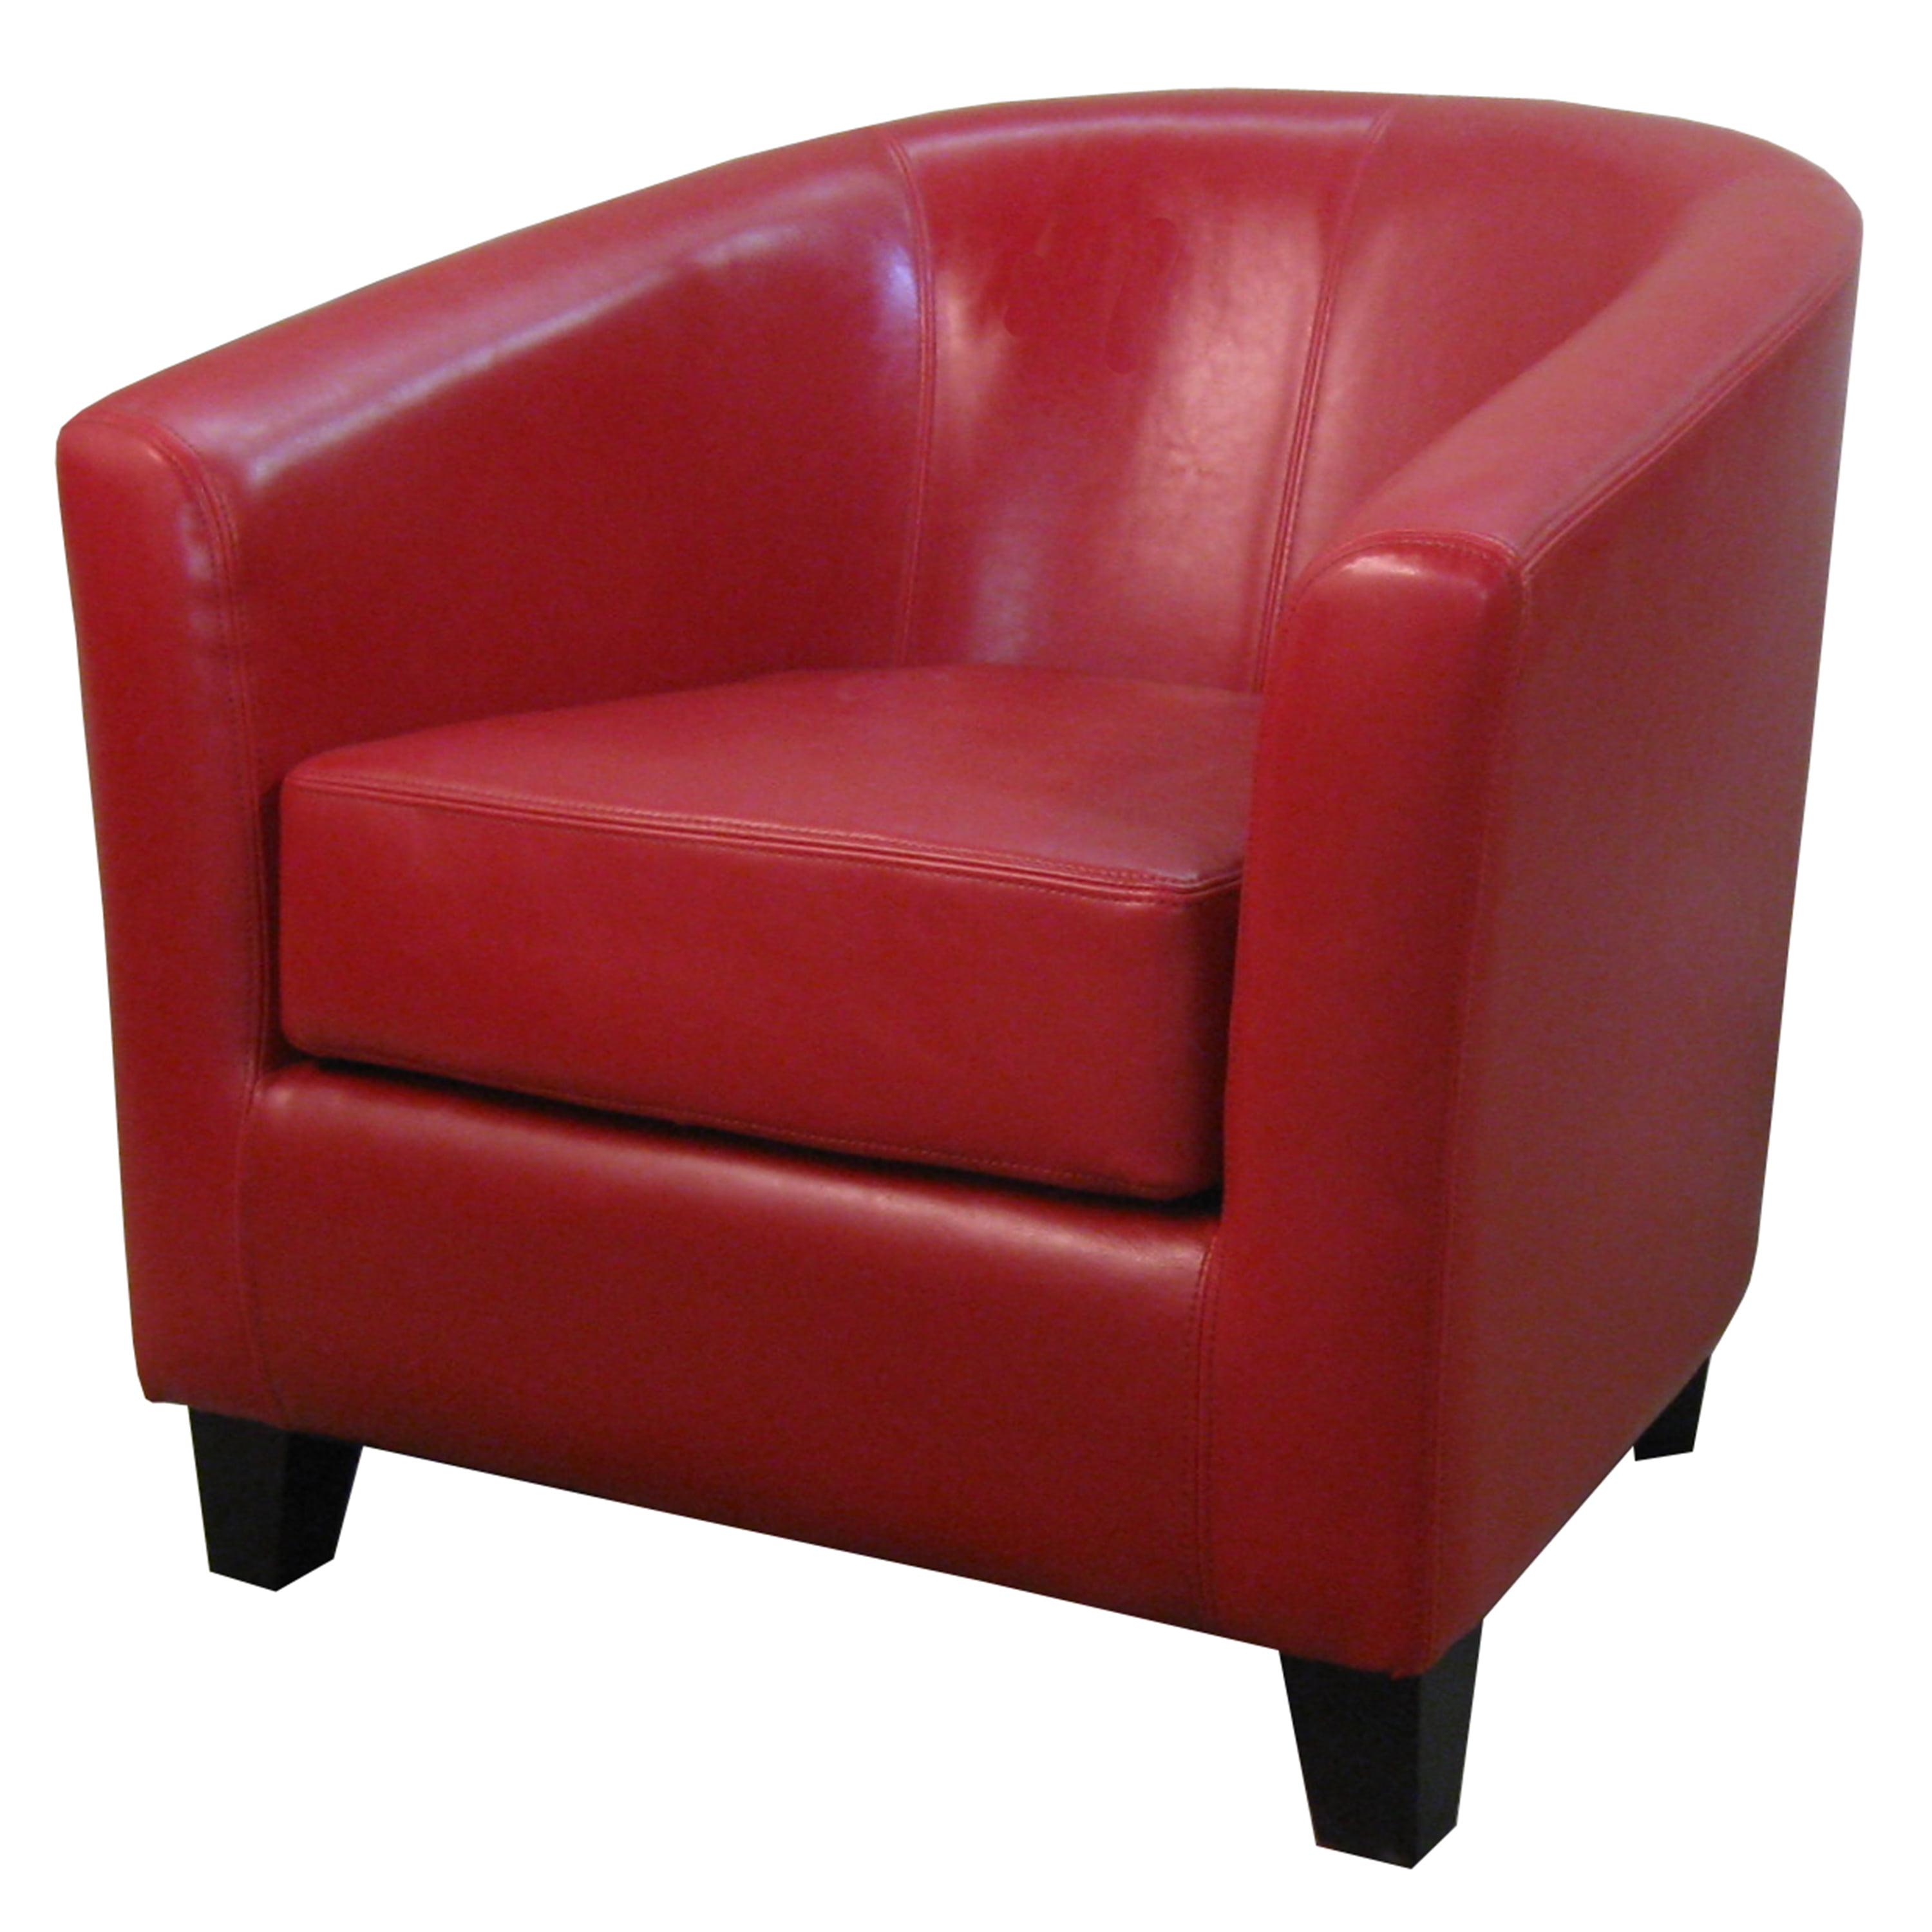 Hayden Tub Chair, Multiple Colors - Walmart.com